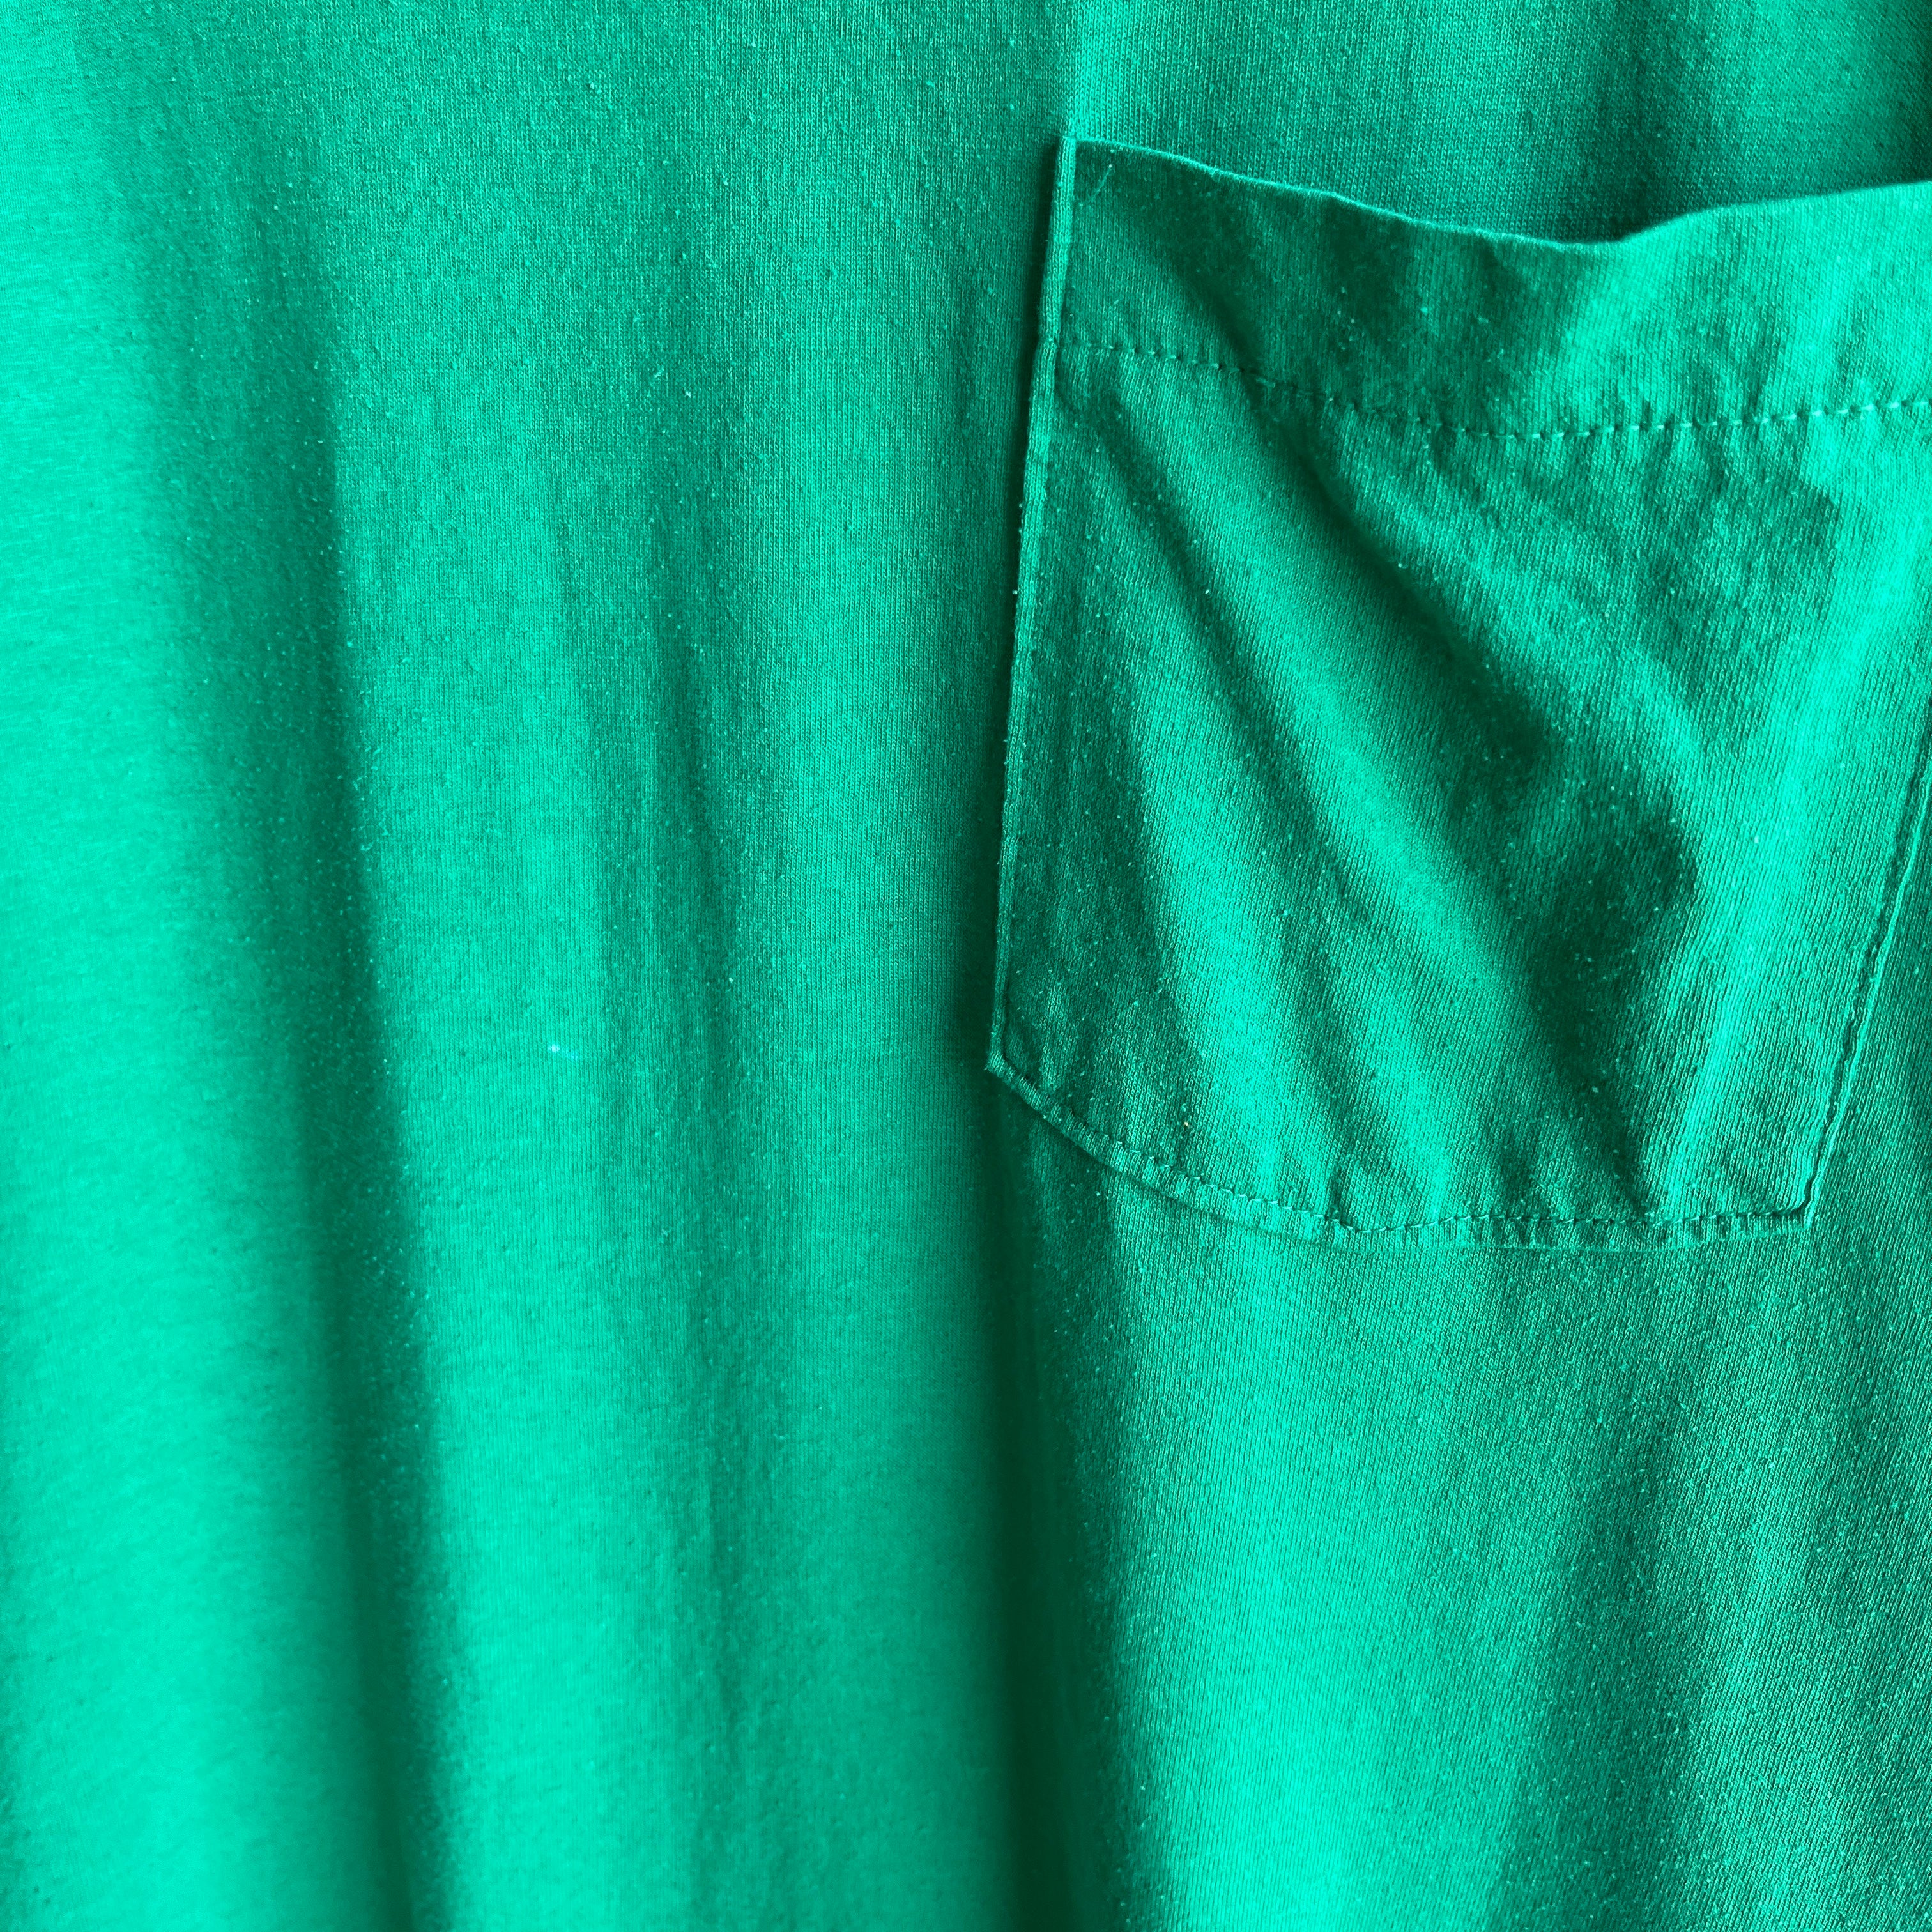 1990/2000s Slouchy Kelly Green Pocket T-Shirt by FOTL